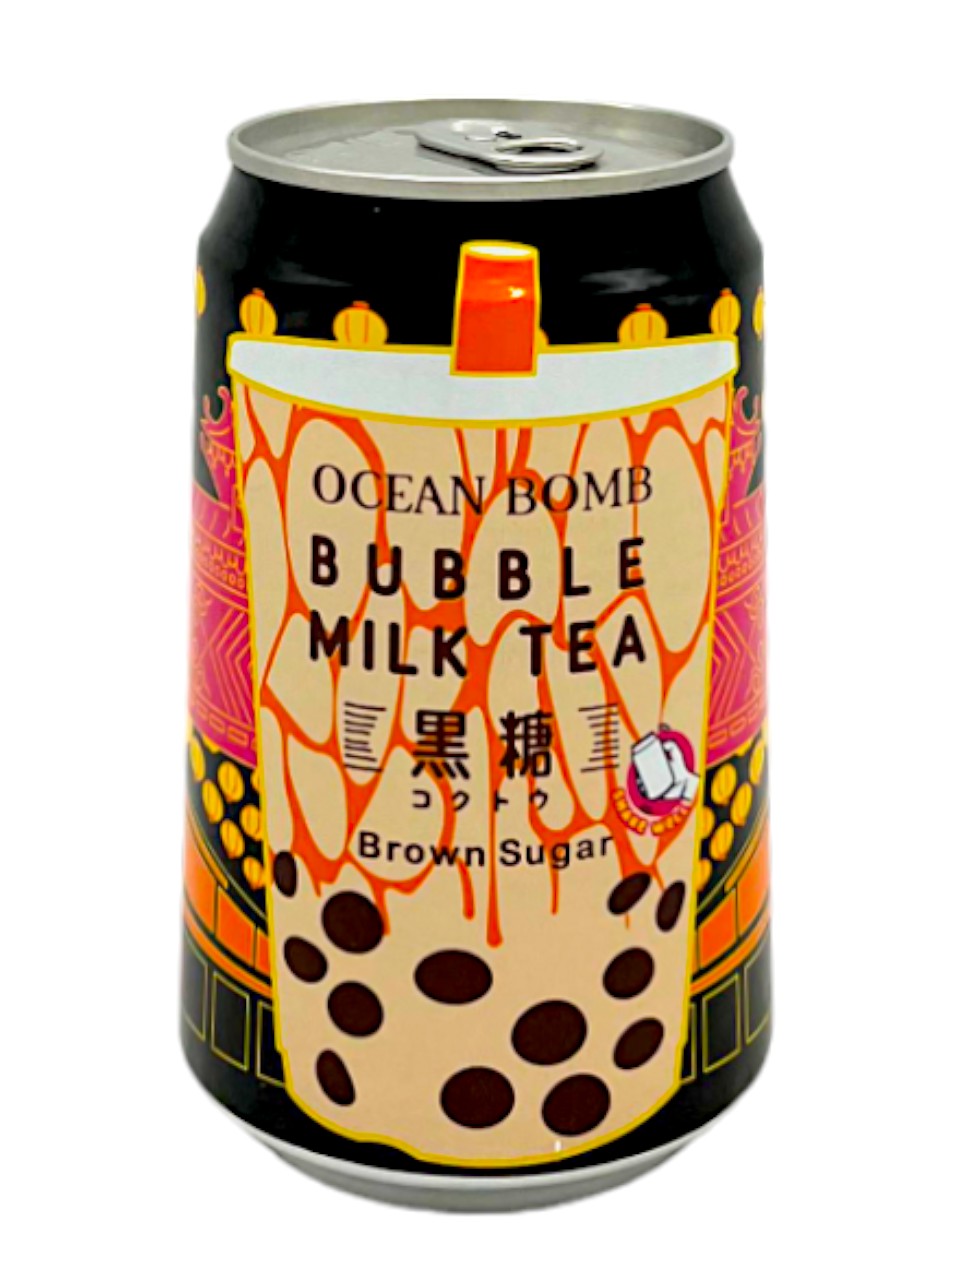 Ocean Bomb Brown Sugar Bubble Milk Tea (Taiwan)